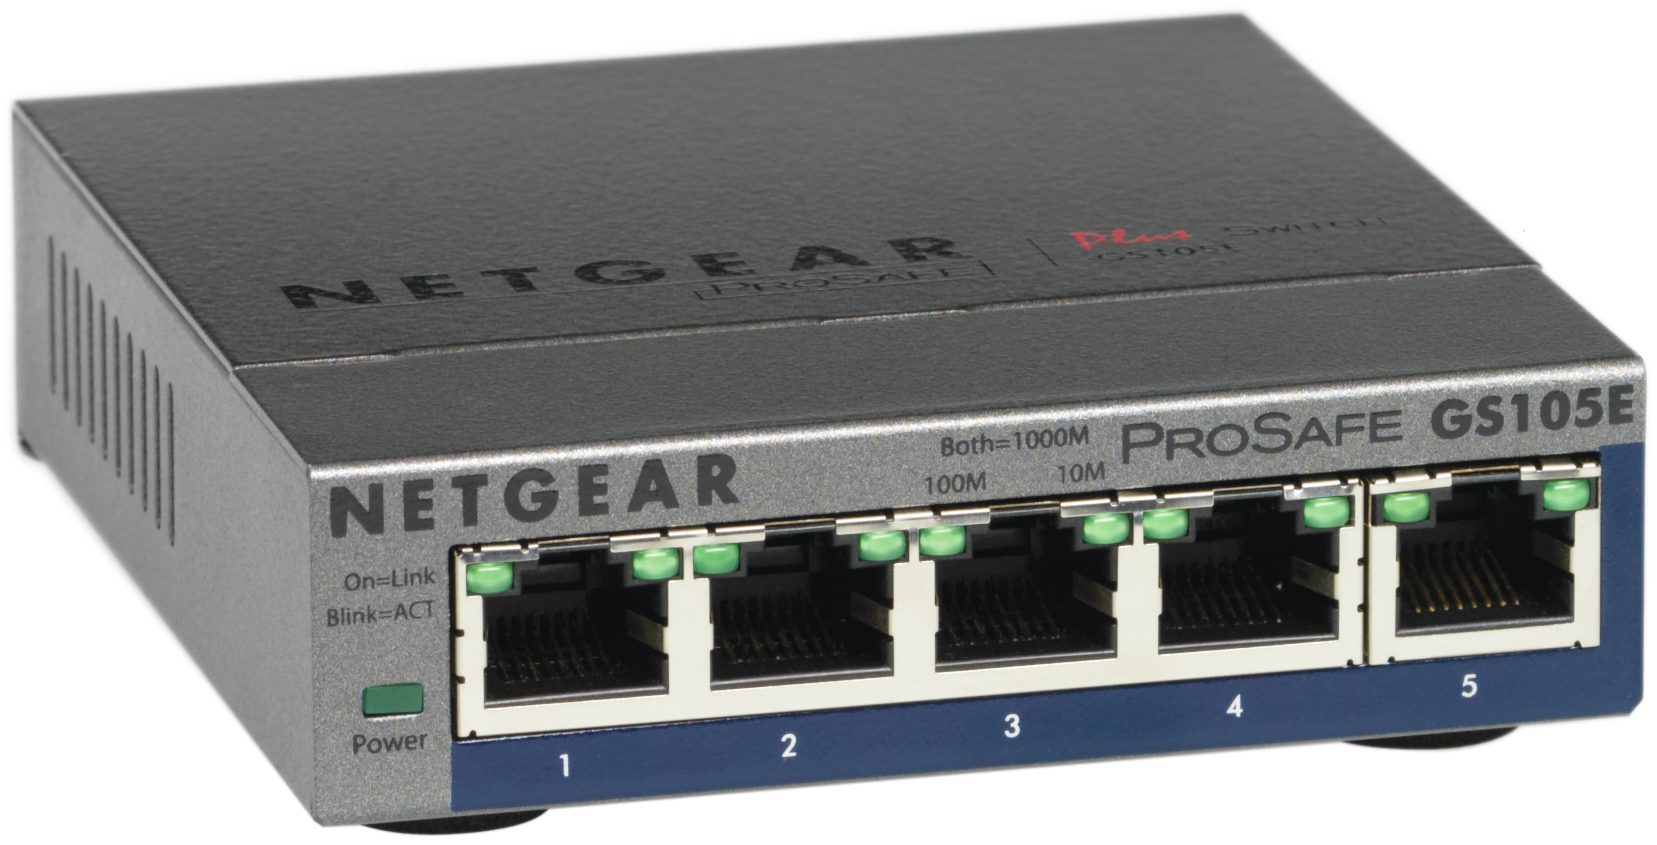 Netgear Prosafe Gigabit Plus GS105E